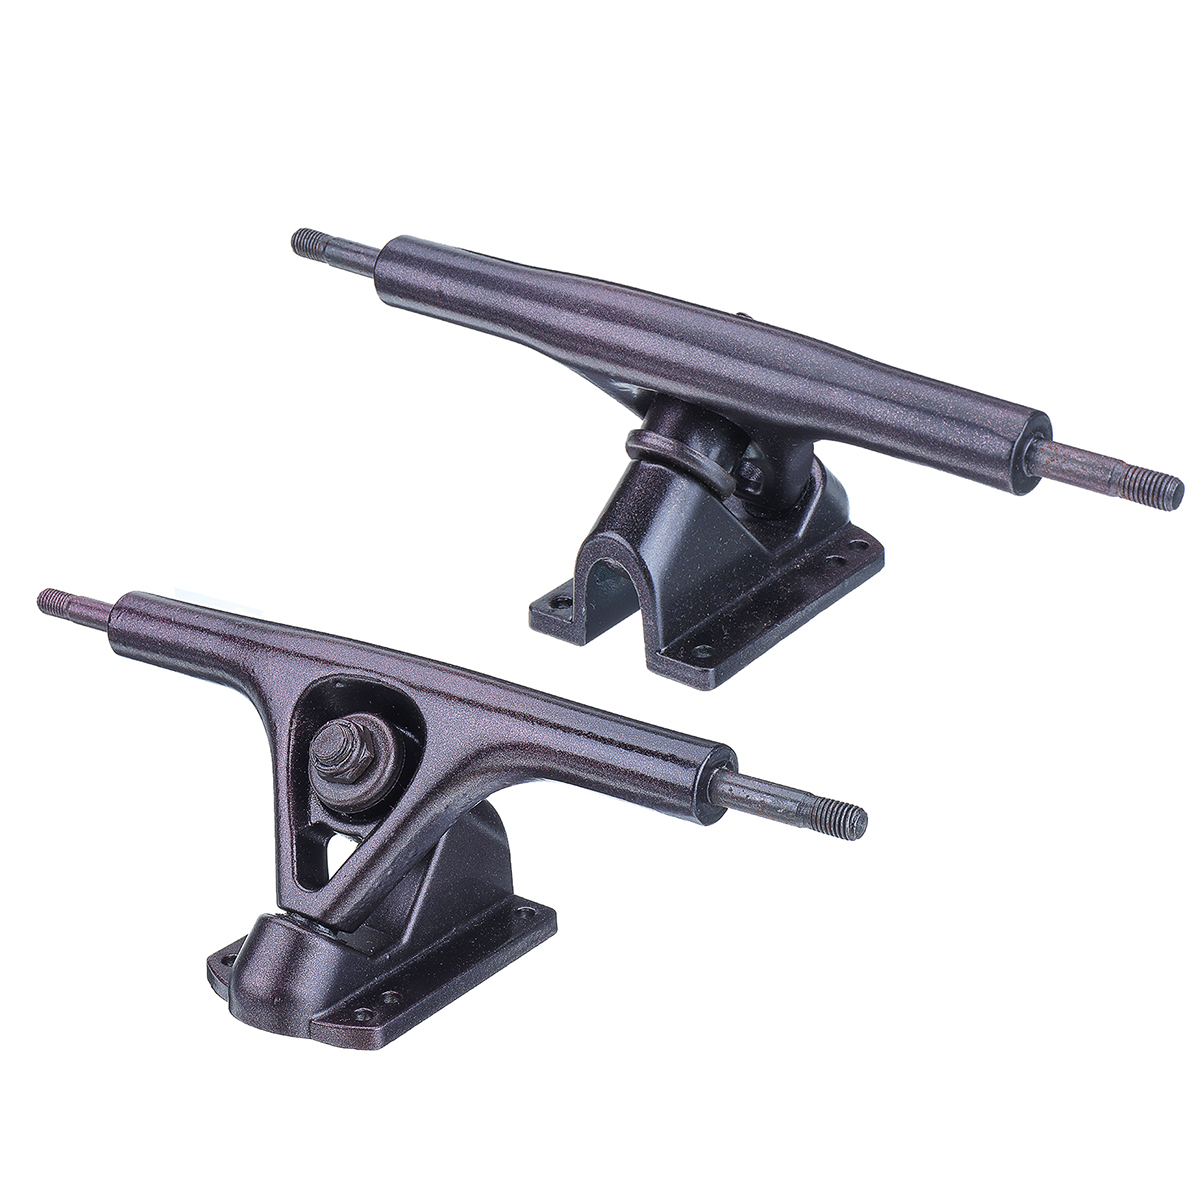 1-Pair-180mm-7-43-Degree-Longboard-Trucks-Electric-Skateboard-Hanger-Parts-1404807